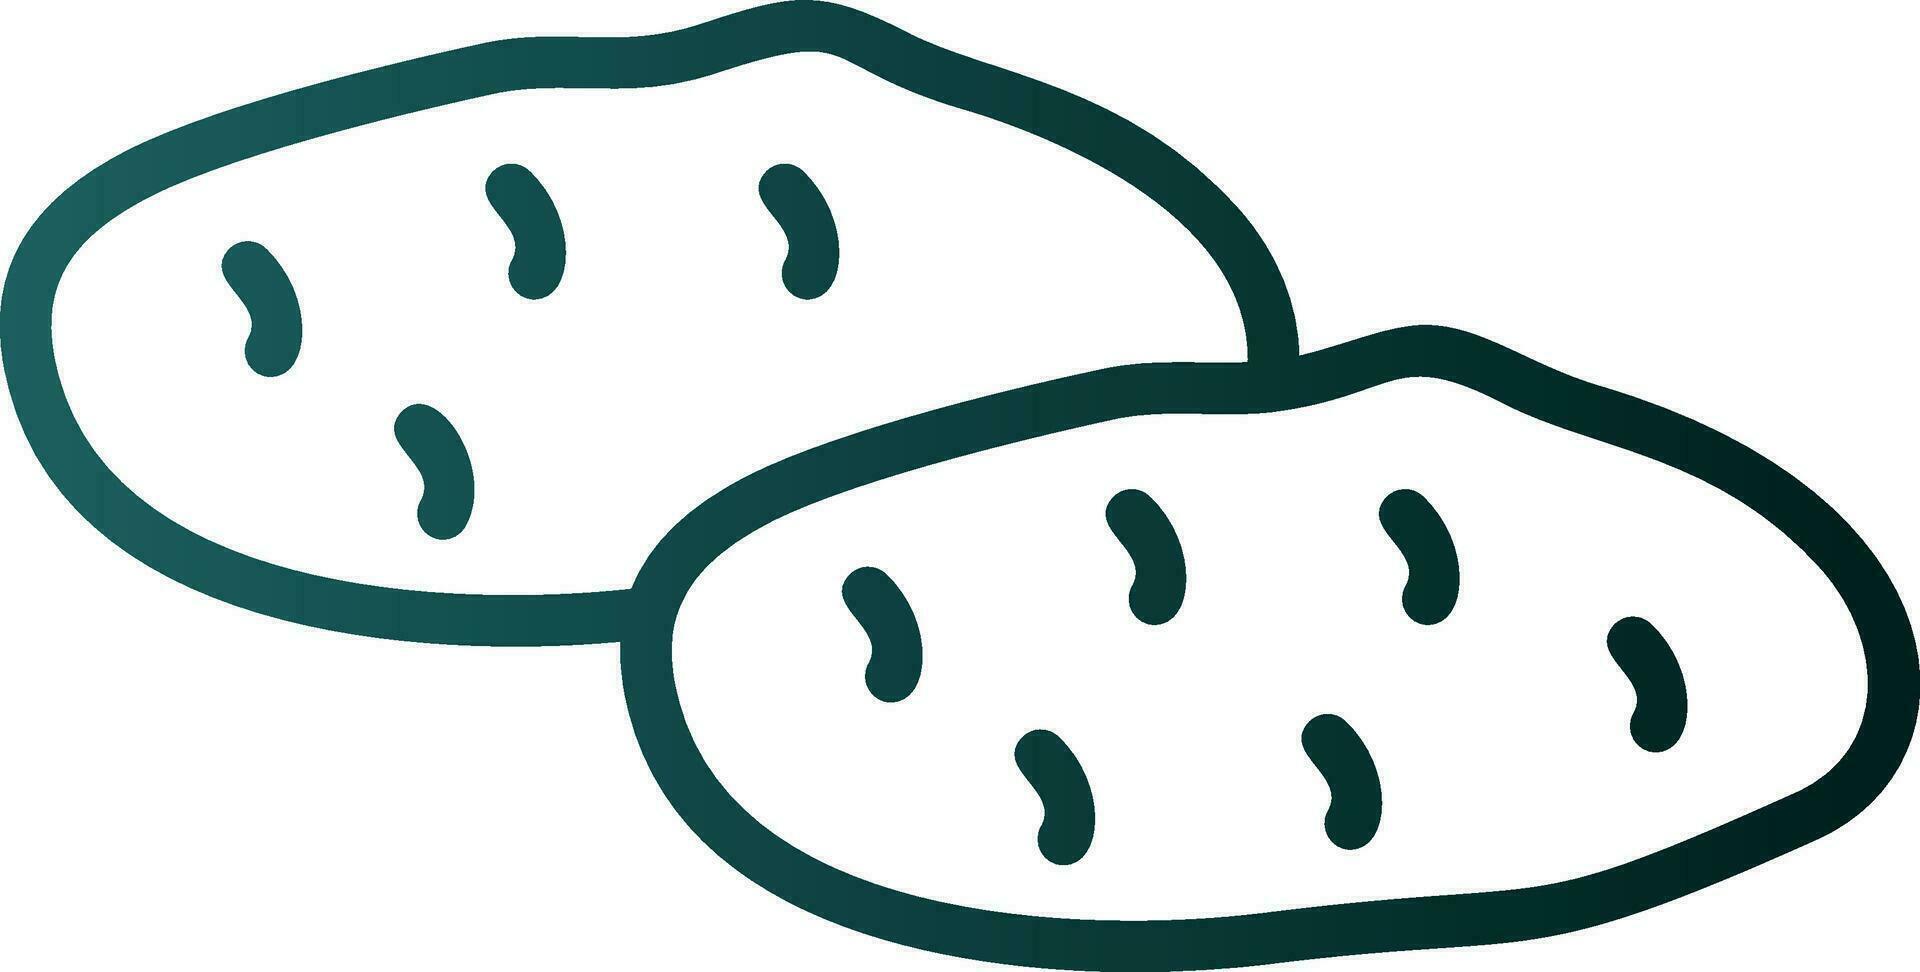 Potatoes Vector Icon Design